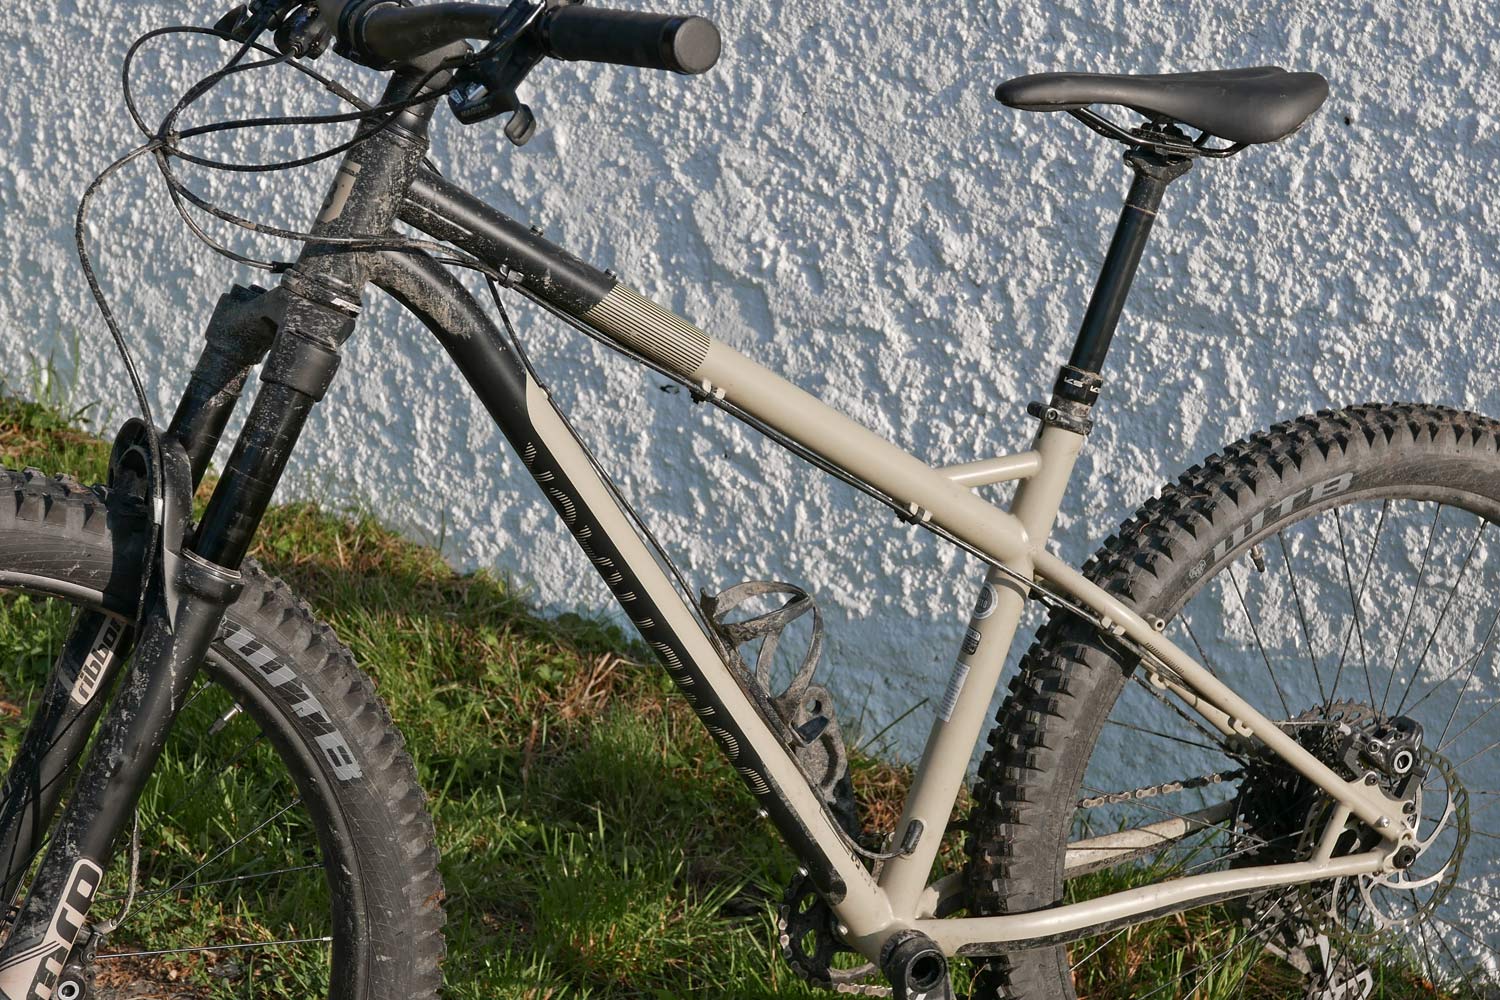 2020 Bombtrack Cale mountain bike, 120mm travel 4130 steel hardtail MTB adventure trail bike